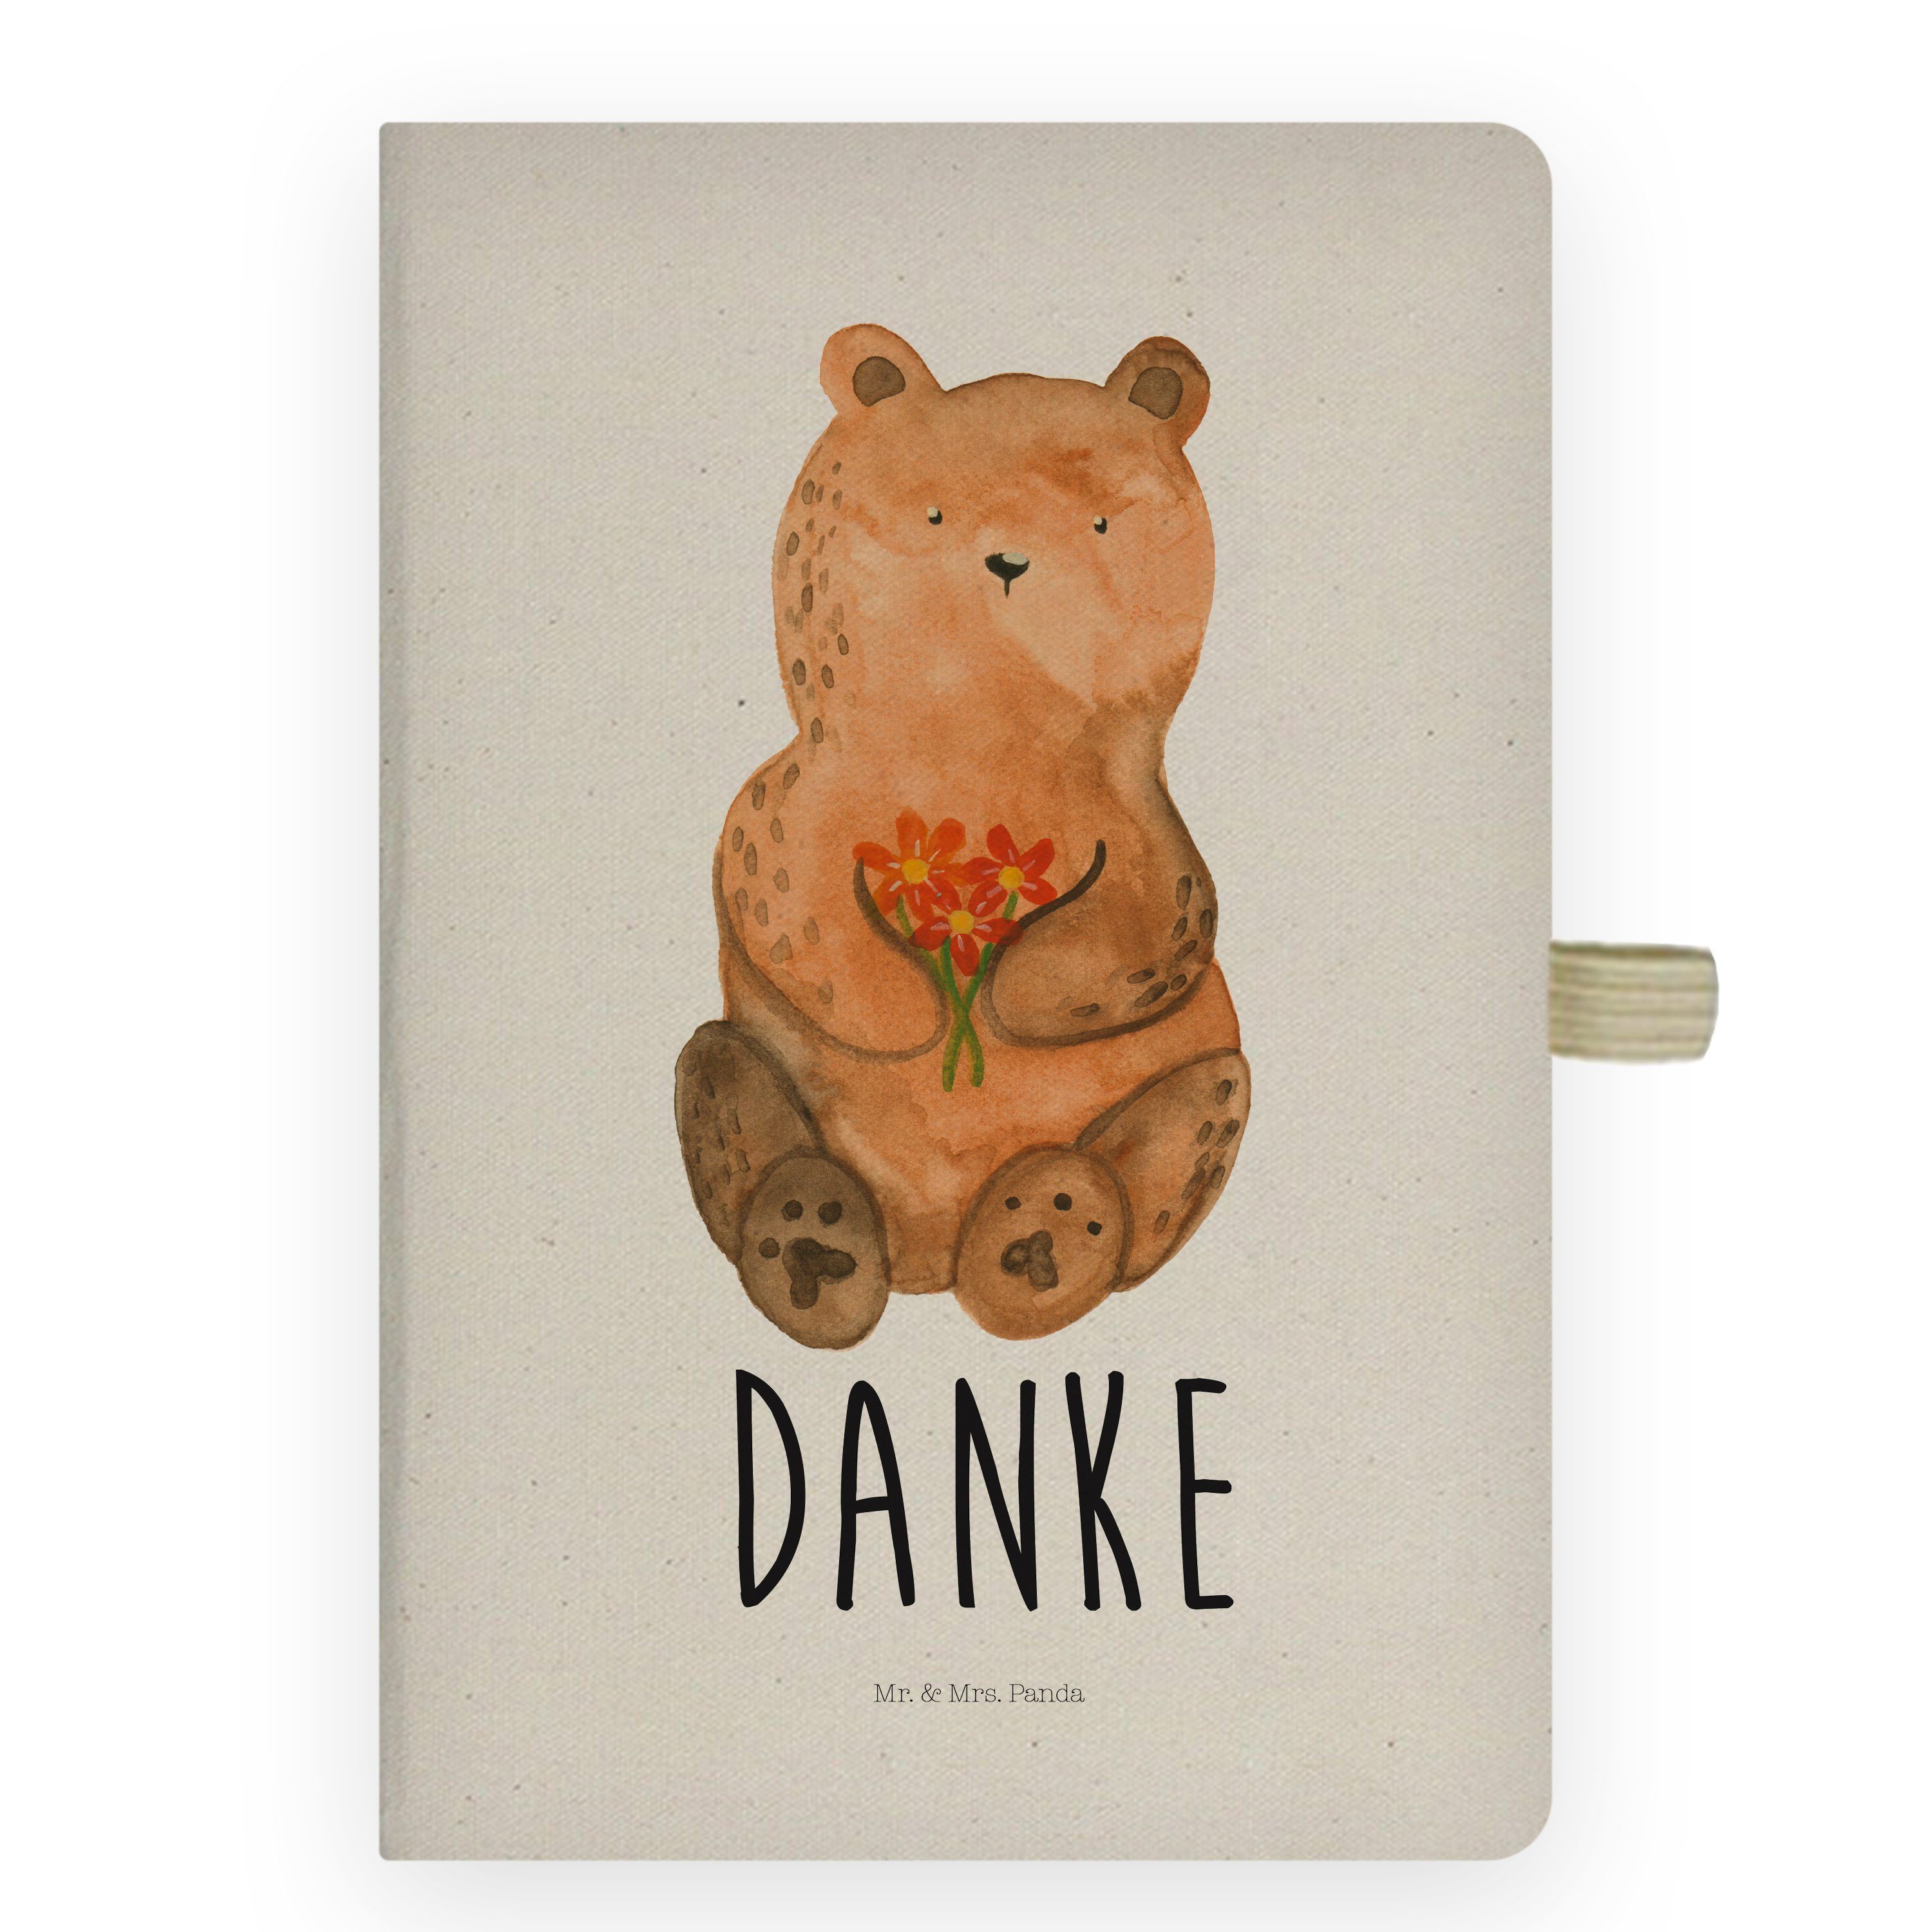 Panda Blumen, Mr. Danke, Transparent Notizbuch Schreibb - - Geschenk, Dankbär Mrs. & Dankeschön,